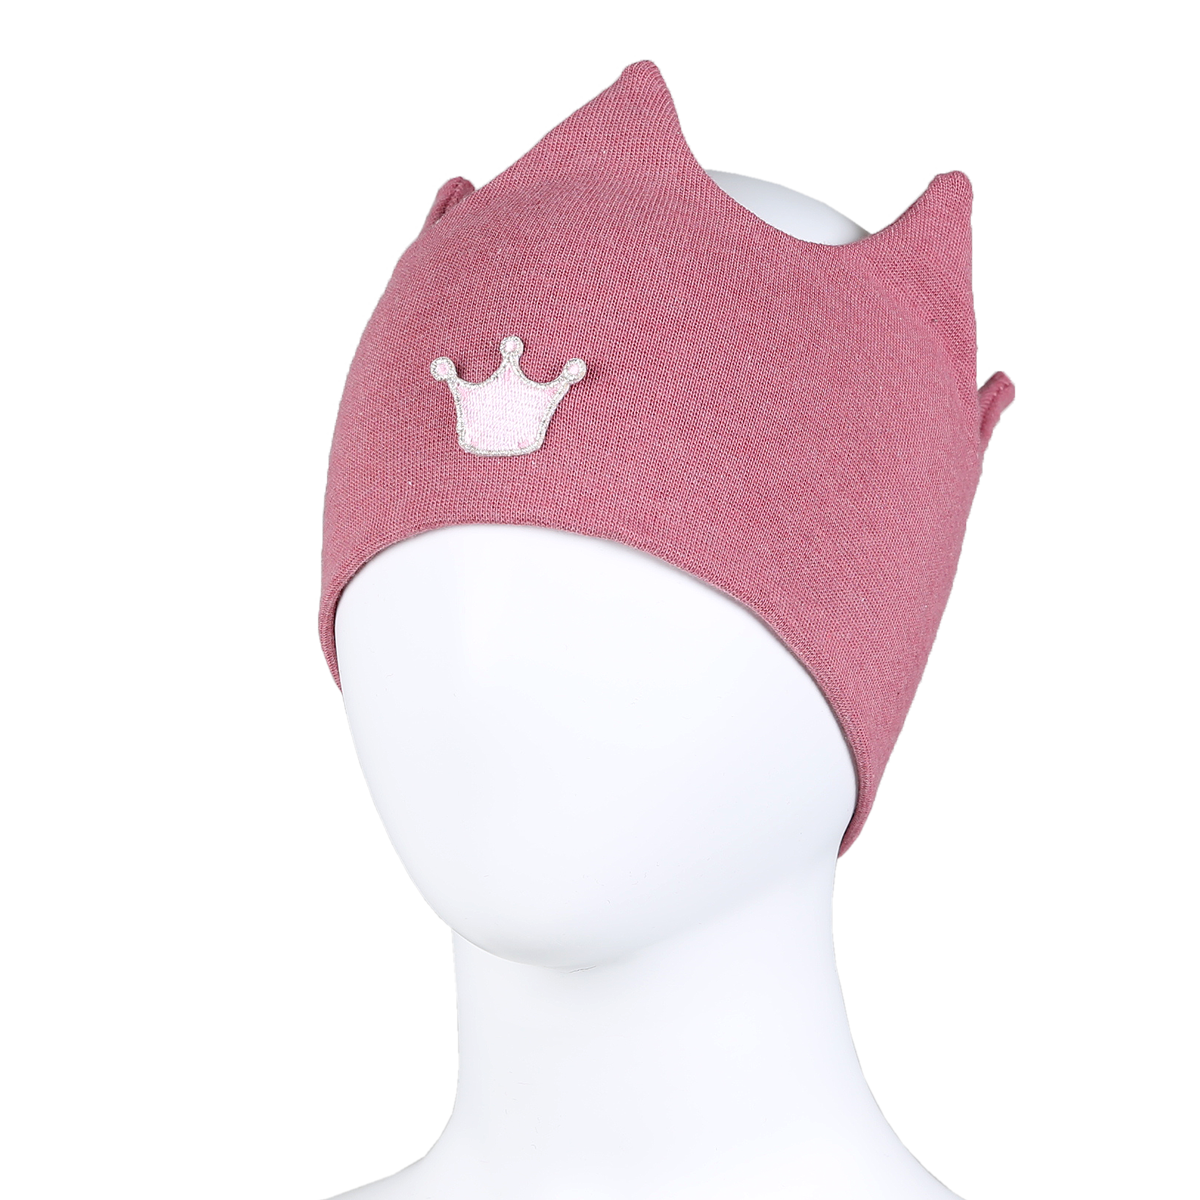 Crown headband